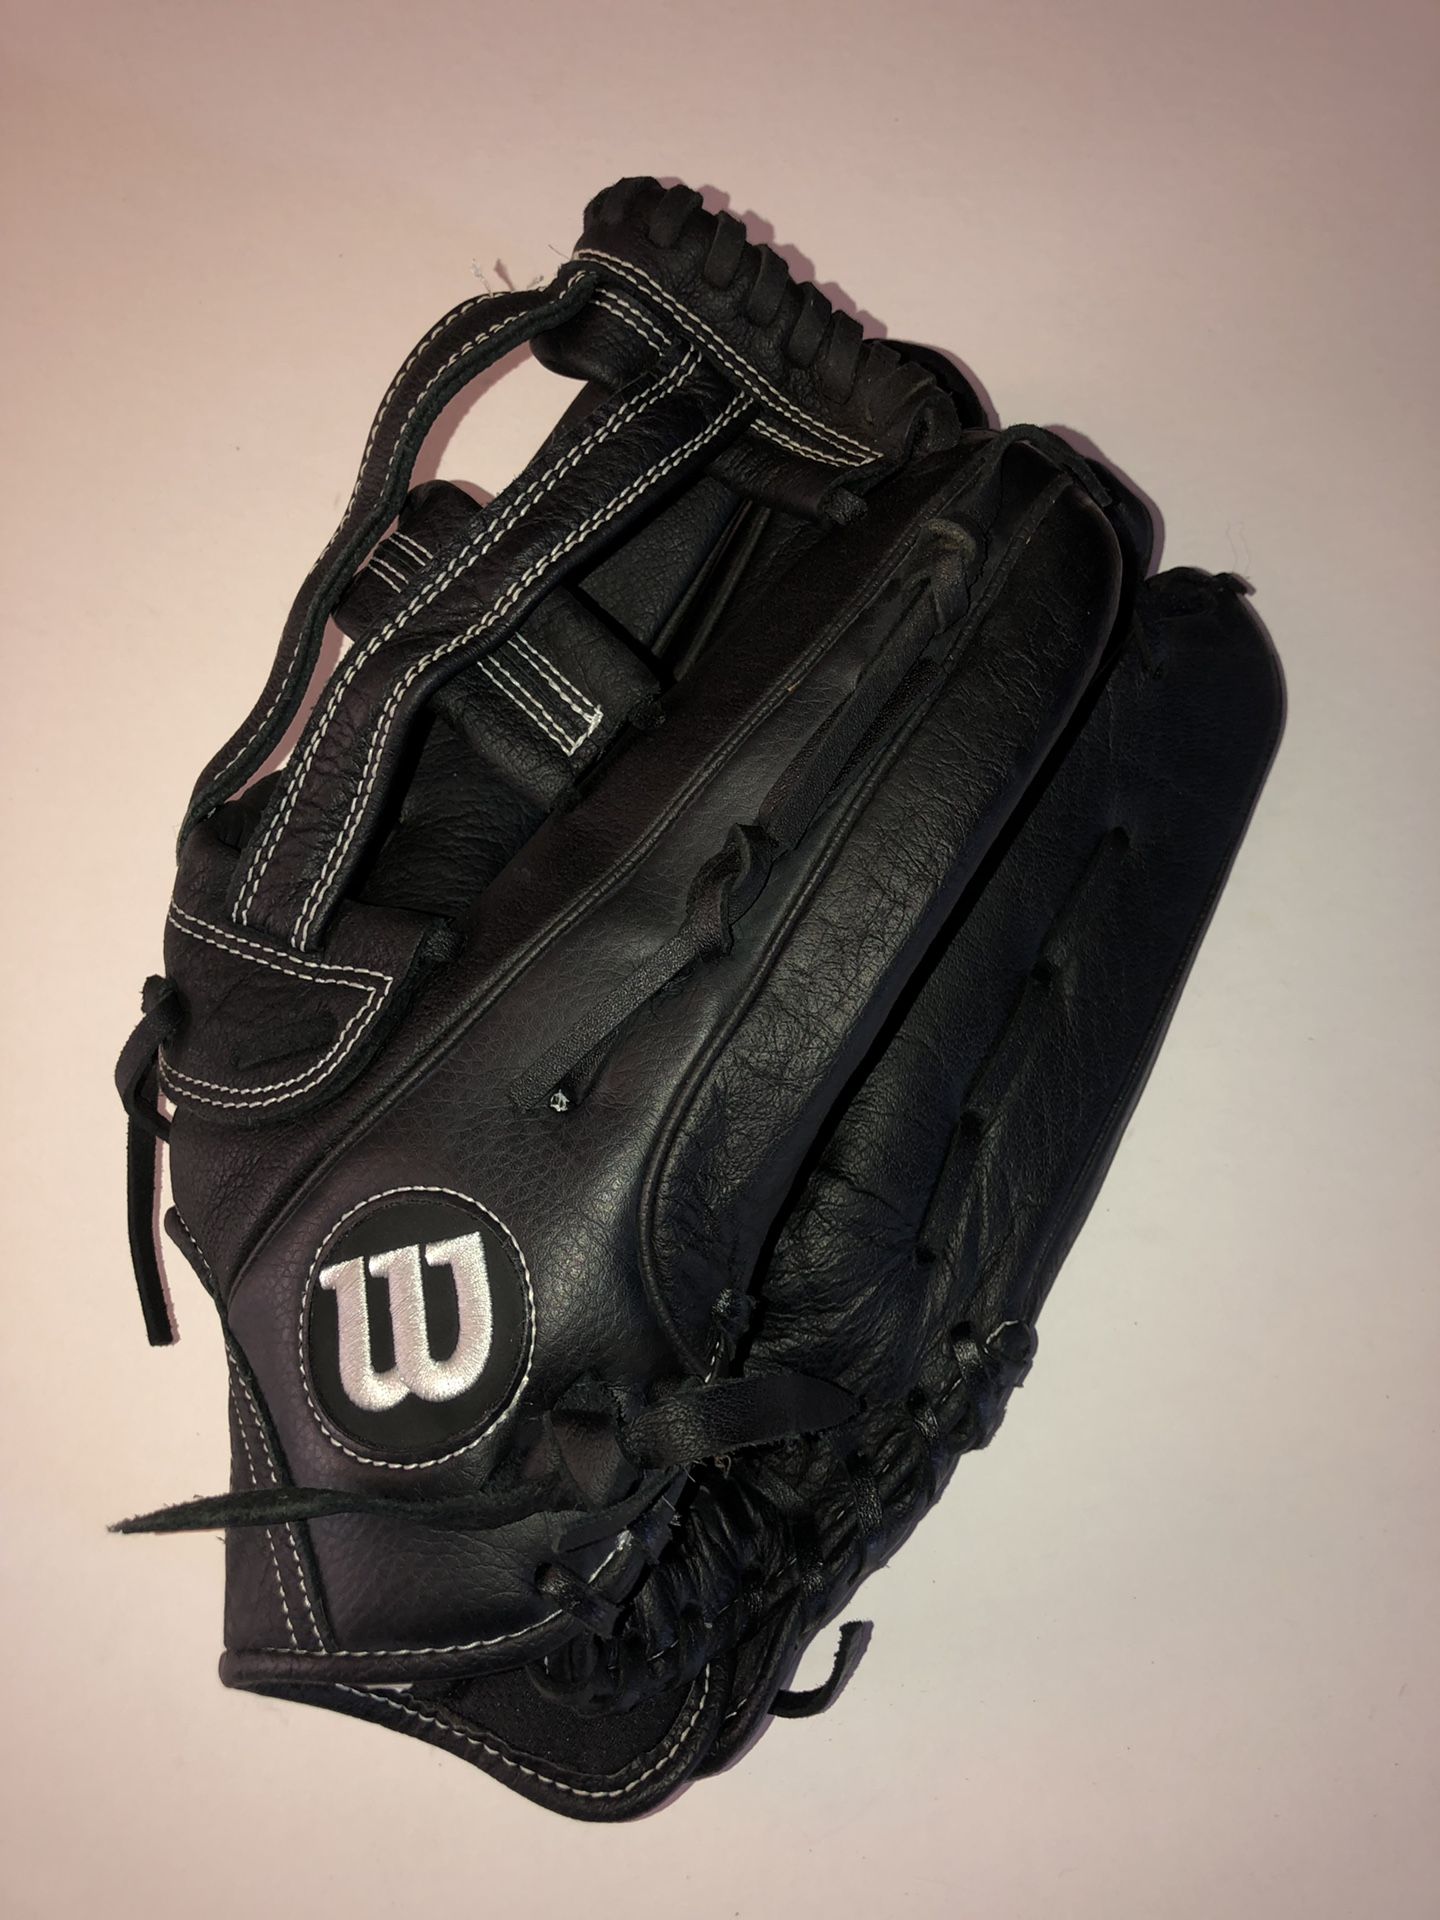 Wilson softball glove 14” leather